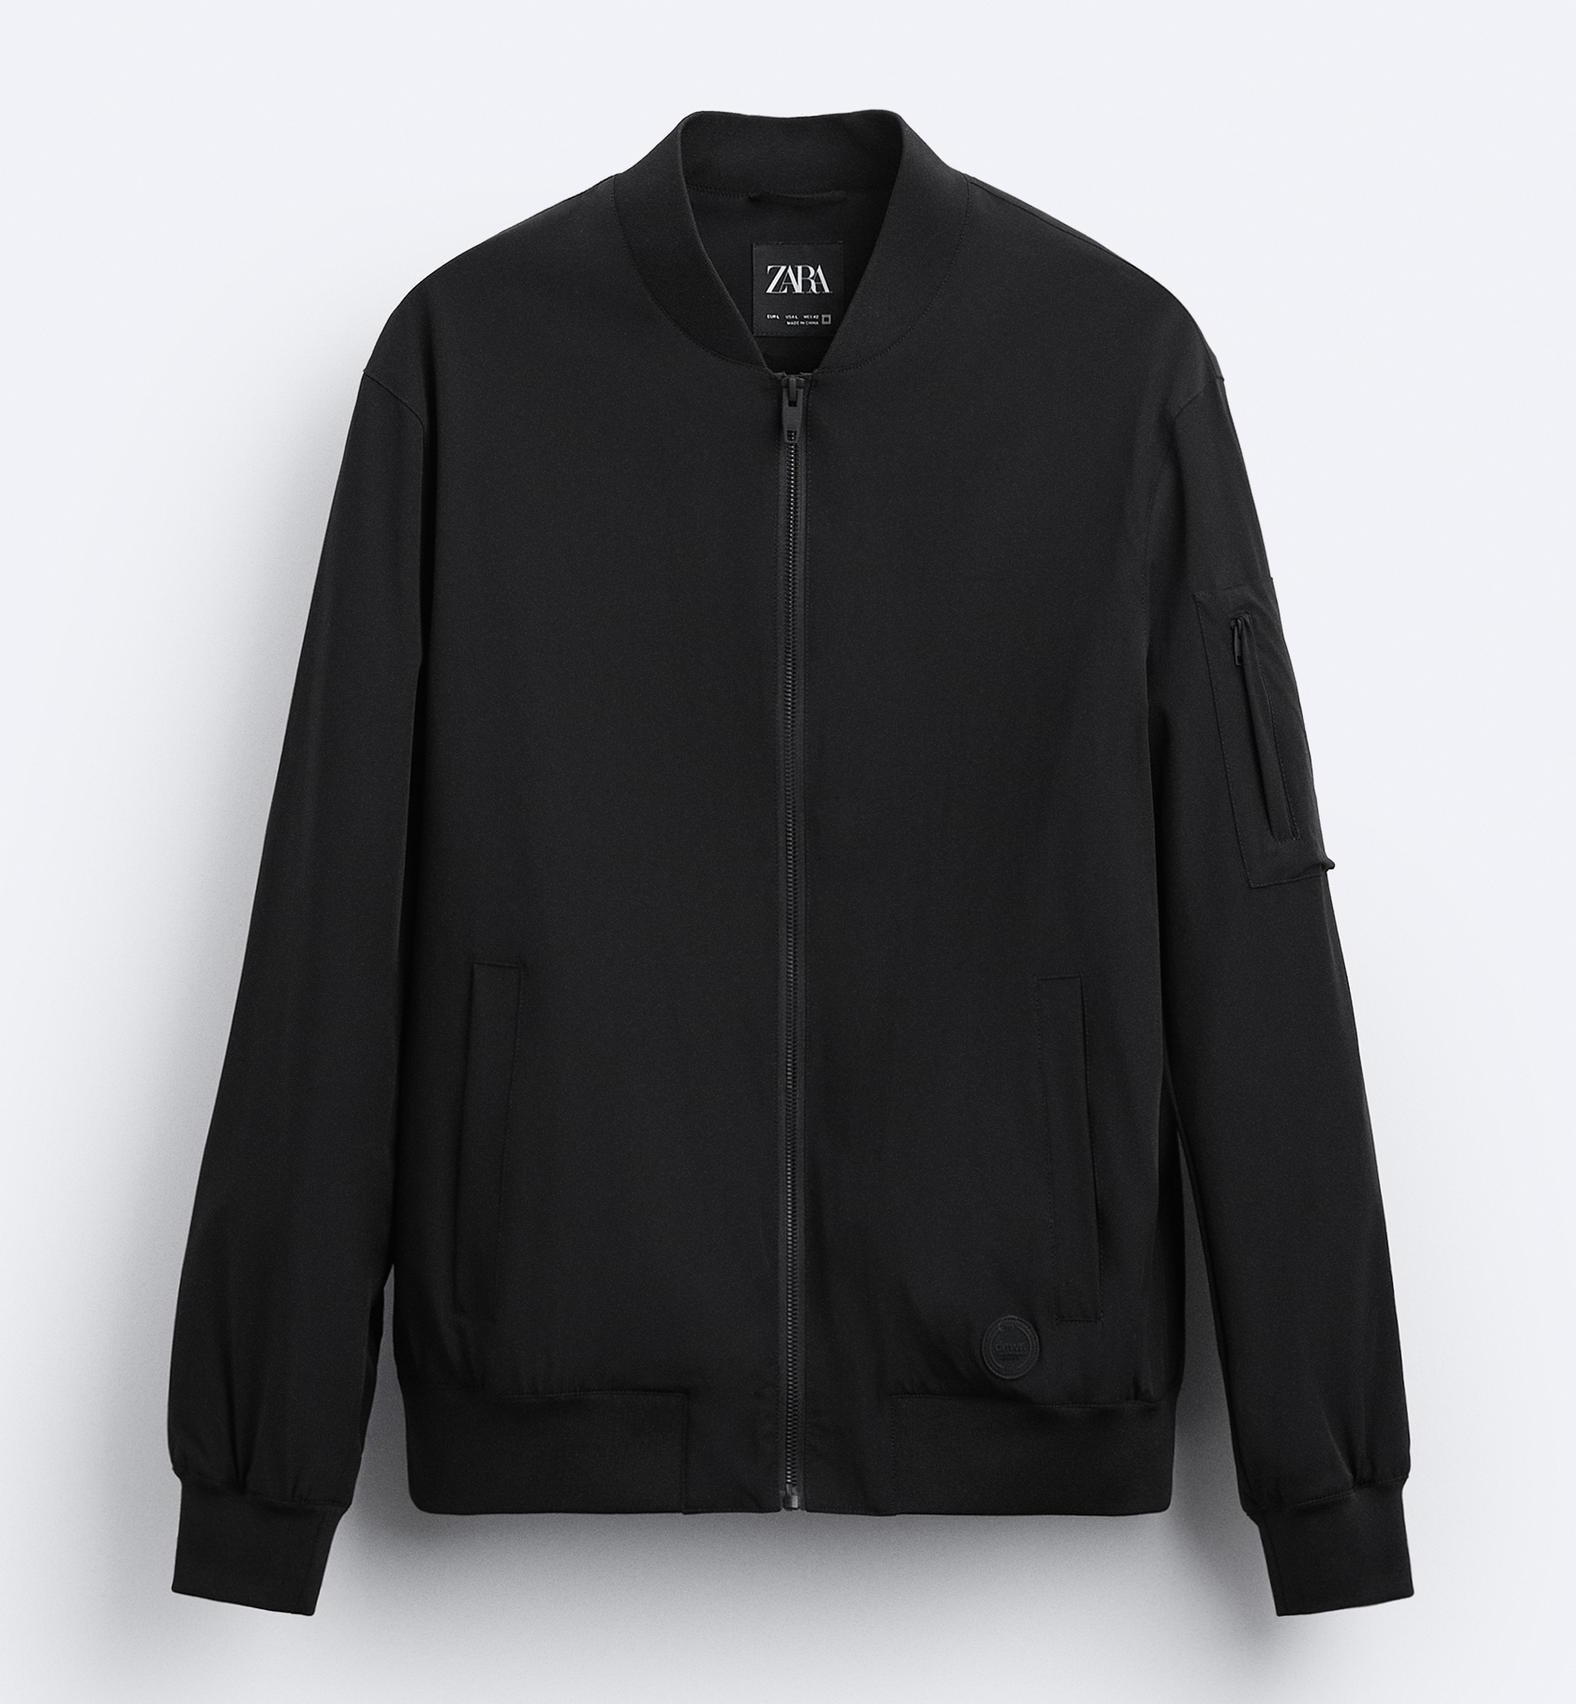 Куртка-бомбер Zara Lightweight, черный куртка бомбер zara contrast черный белый